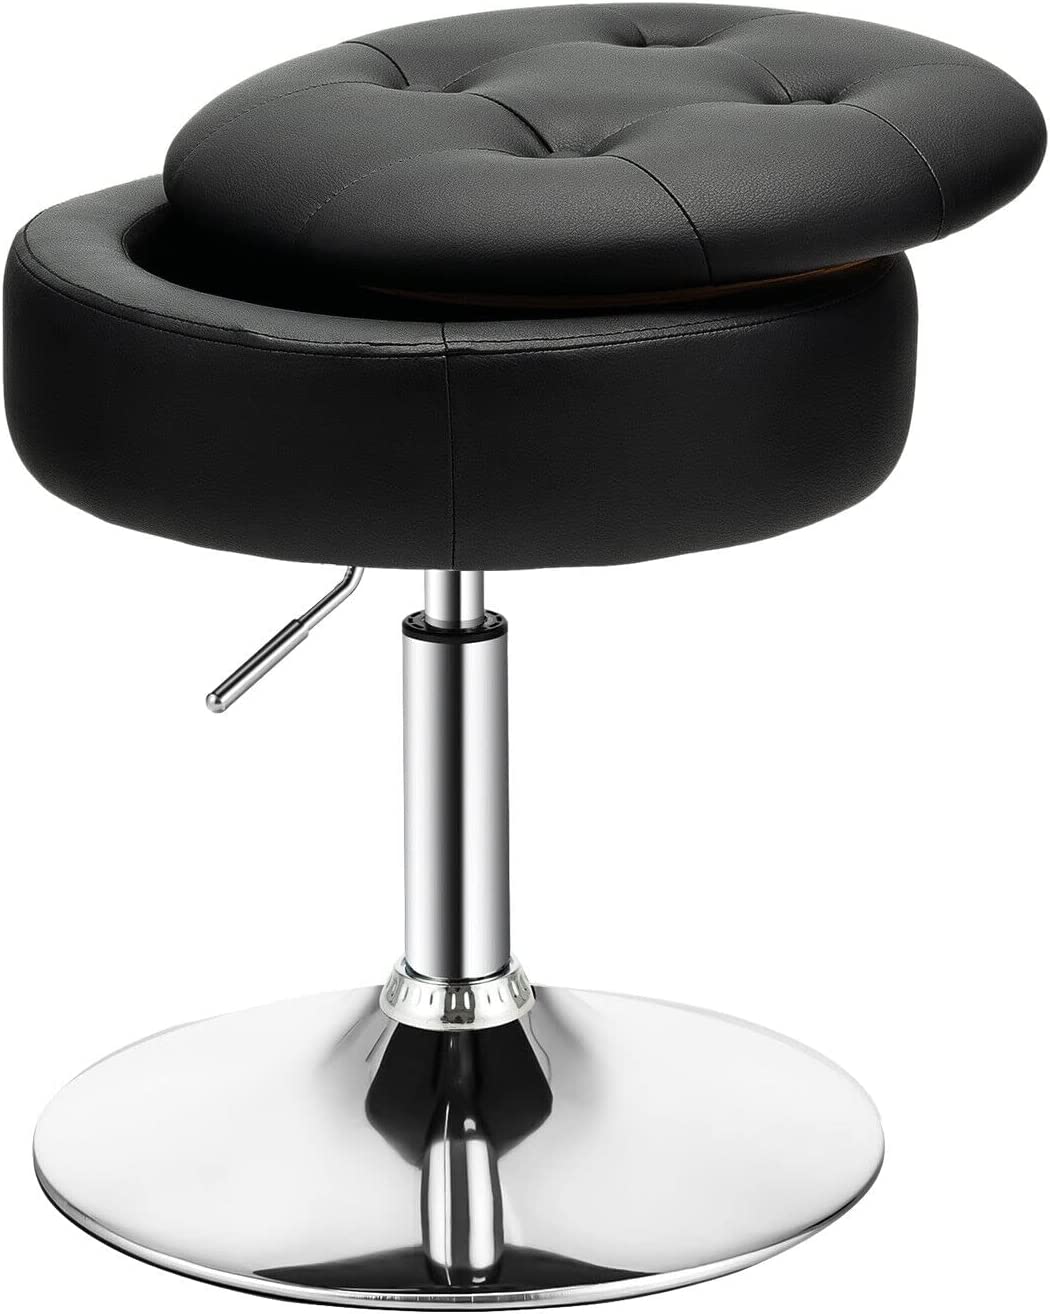 Giantex Vanity Stool with Storage, 360° Swivel PU Leather Vanity Chair, 50-66cm Height Adjustable Makeup Stool